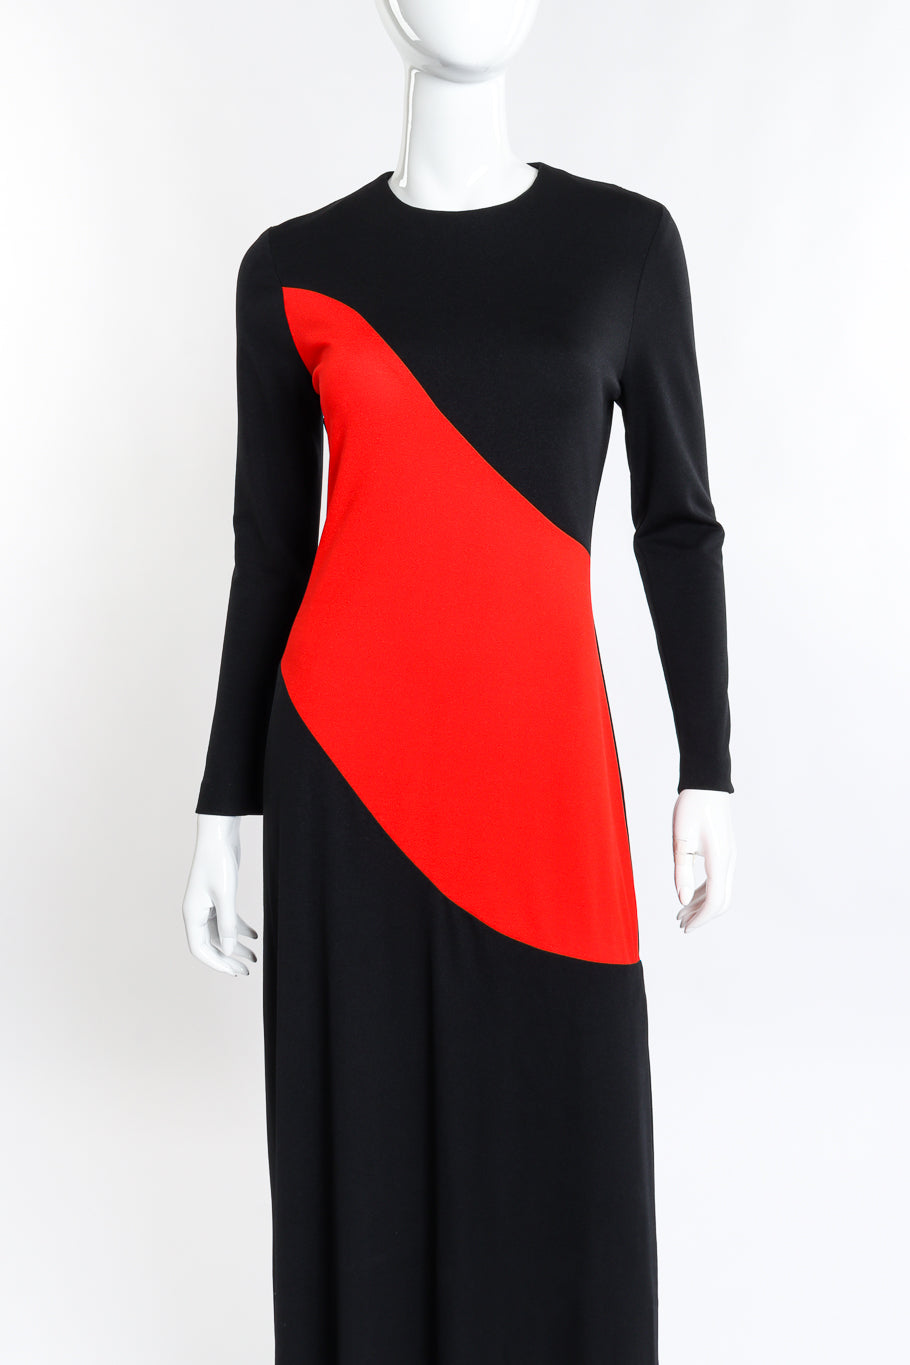 Vintage Rudy Gernreich Wavy Block Jersey Dress front on mannequin closeup @recess la